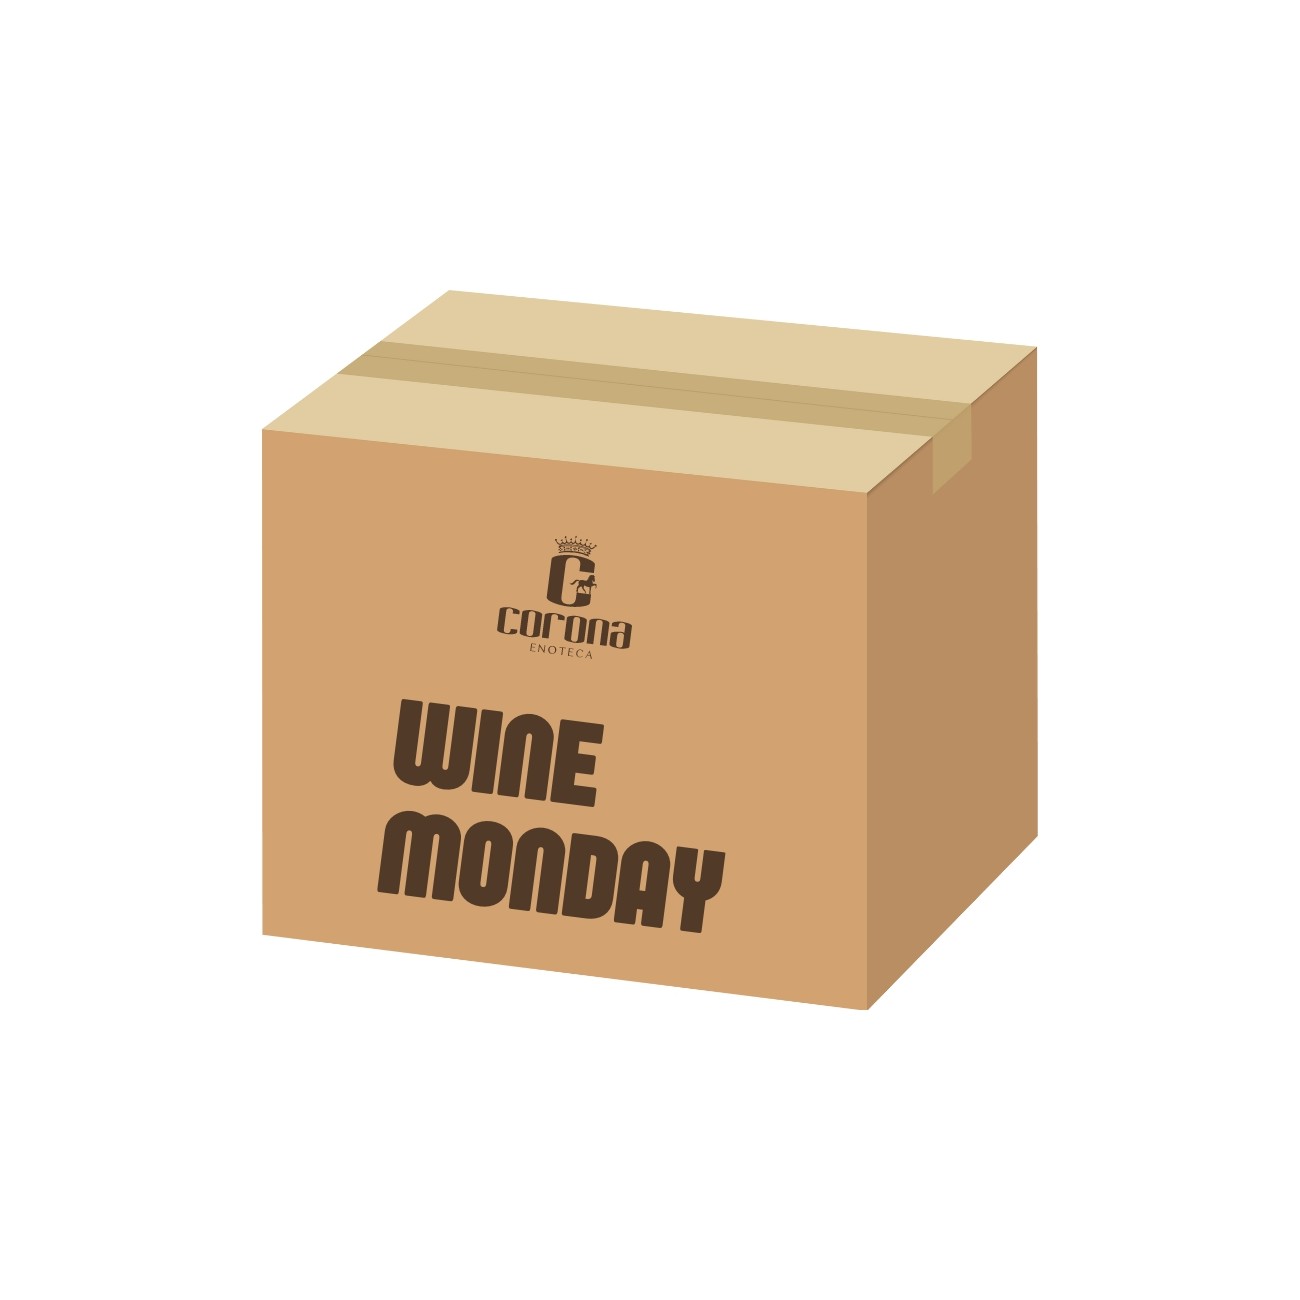 Wine Monday Box